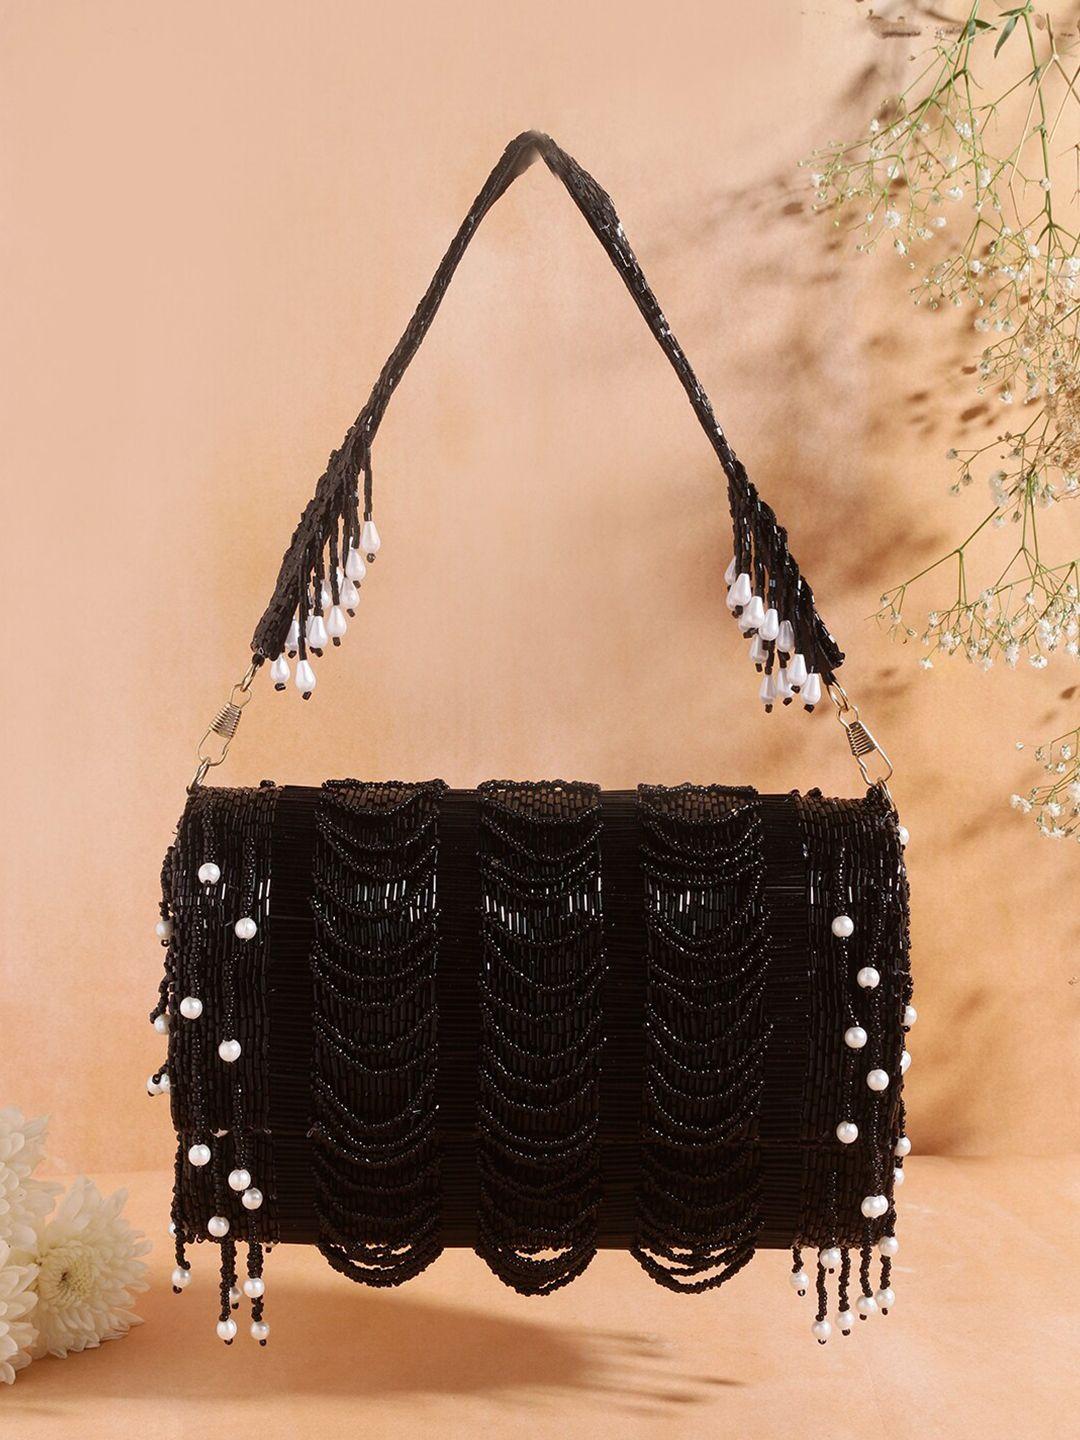 swisni-black-&-white-embellished-embellished-purse-clutch